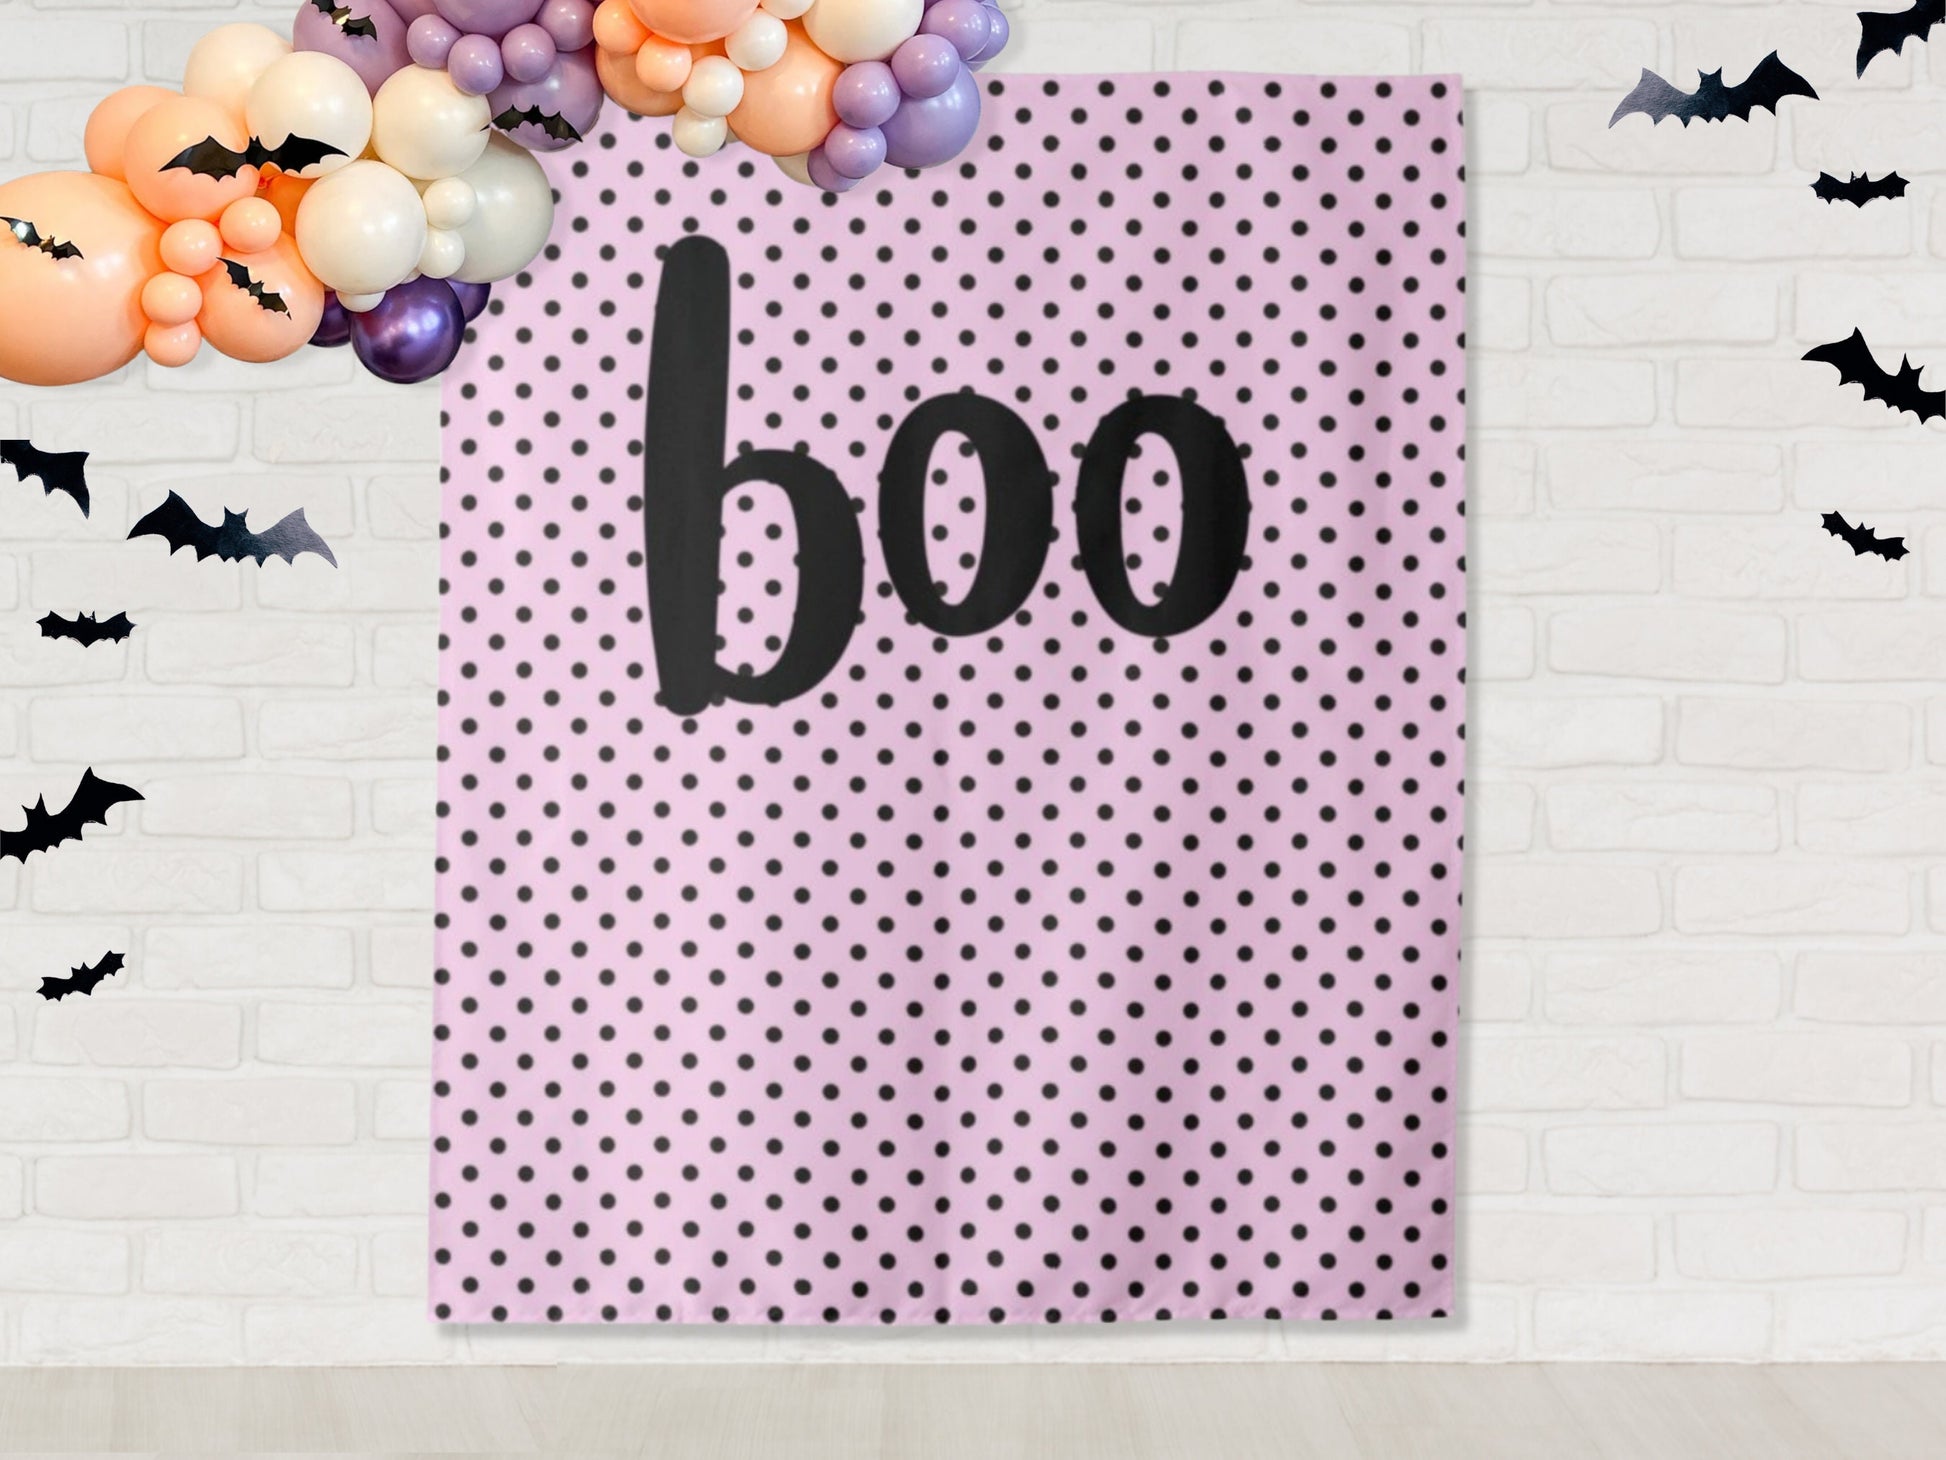 Custom Boo Polka Dot Halloween Party Backdrop | Happy Halloween Photo Booth